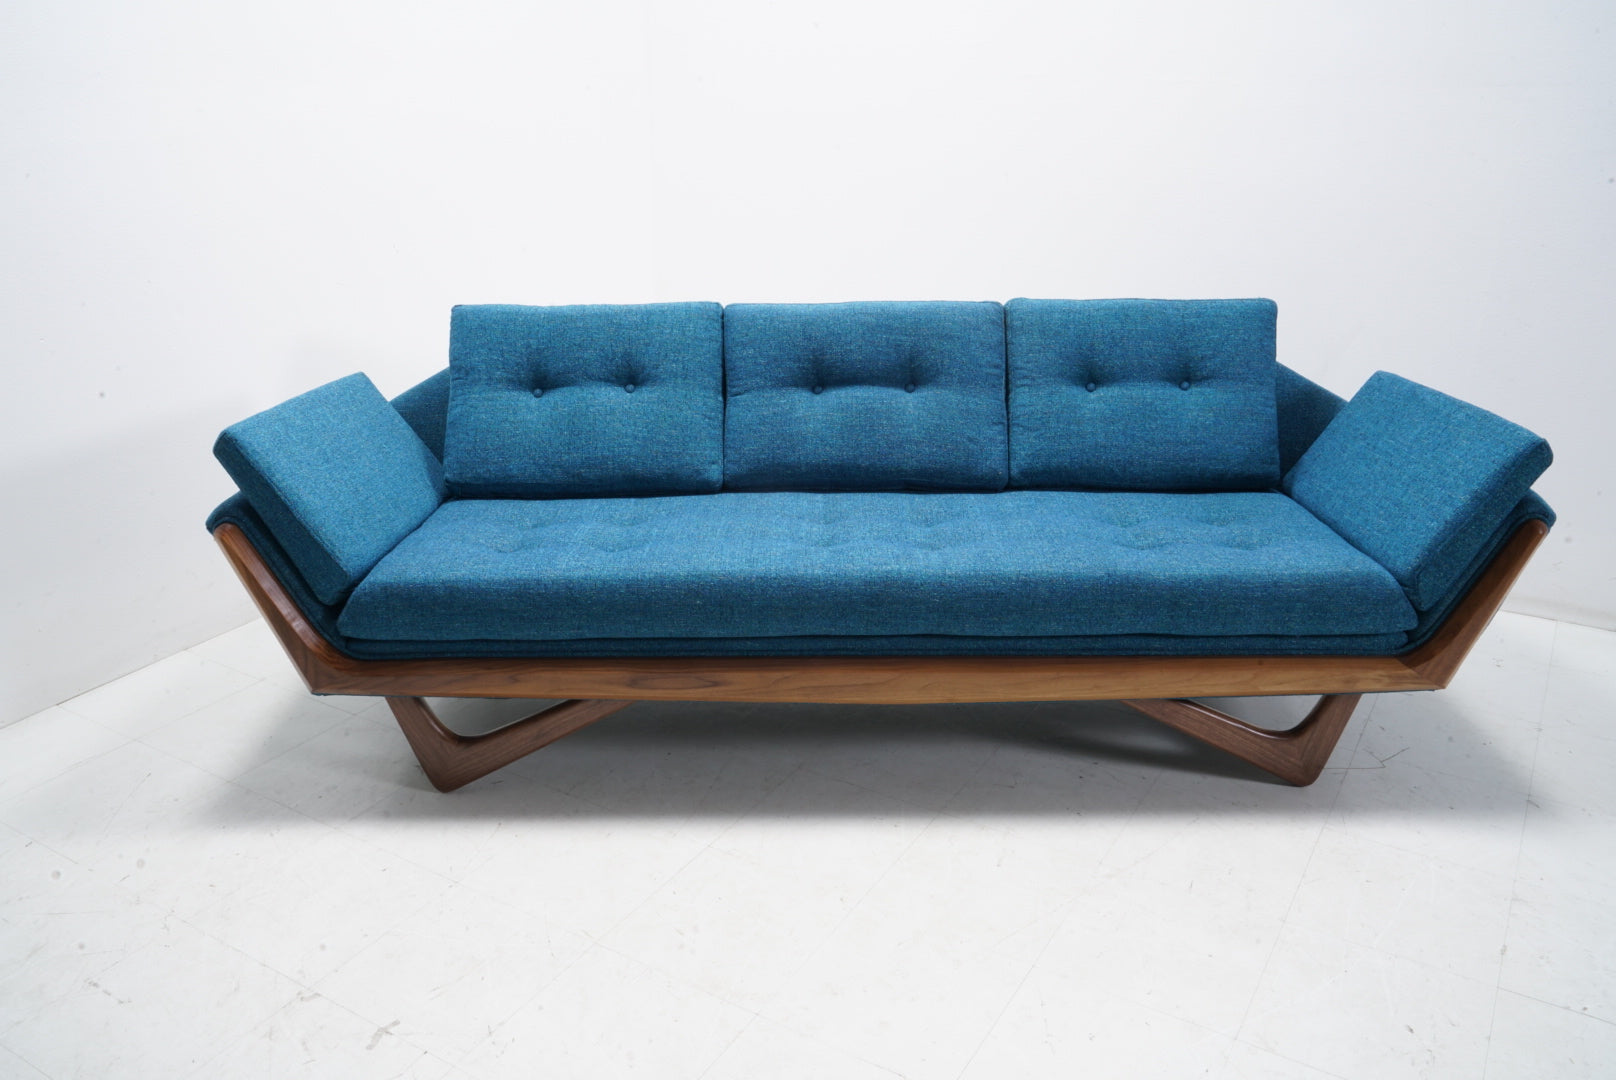 Custom "Pearsall" Sofa